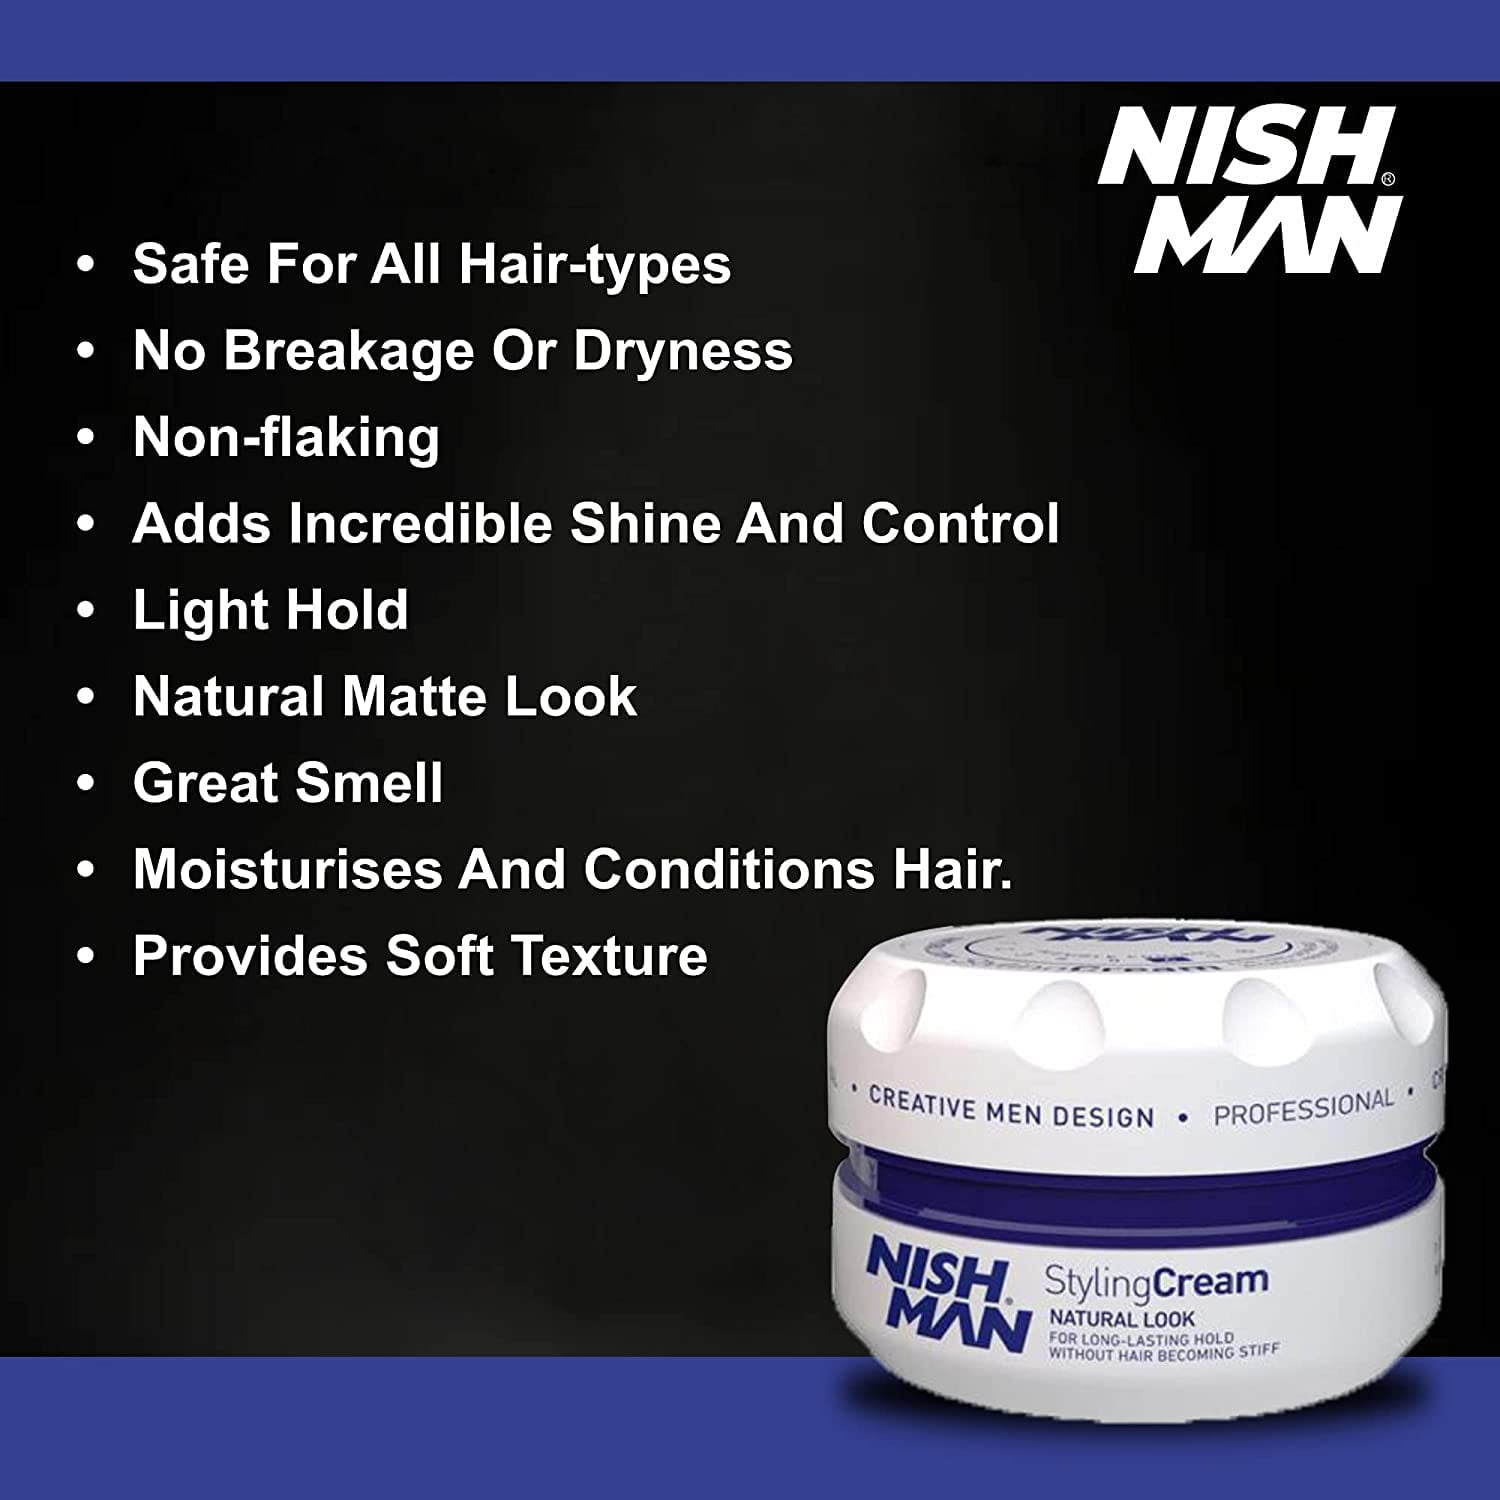 nishman Hair Styling Series (S4 Spider Wax Argan, 150ml)